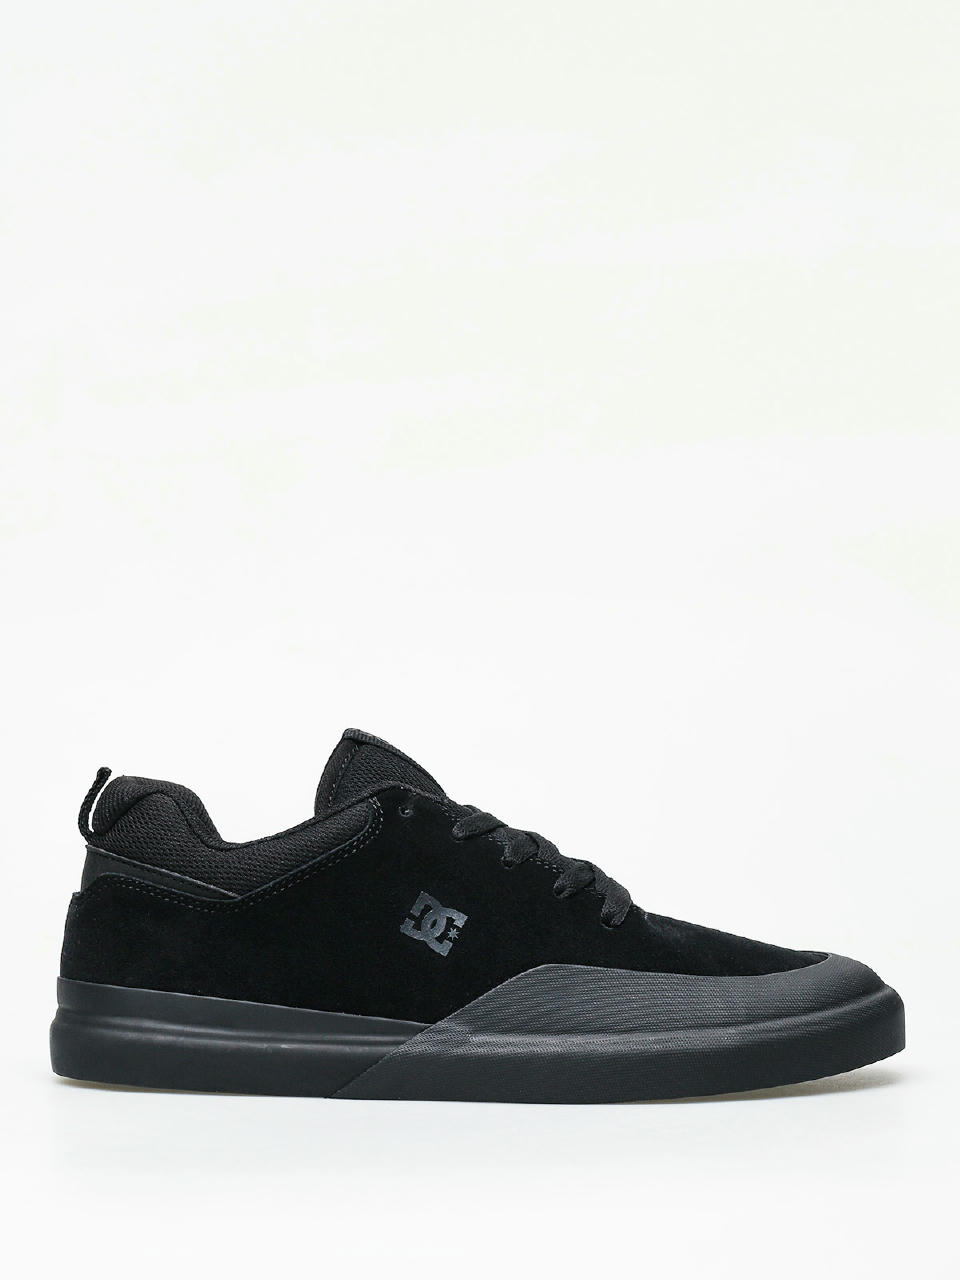 DC Infinite Shoes (black/black)